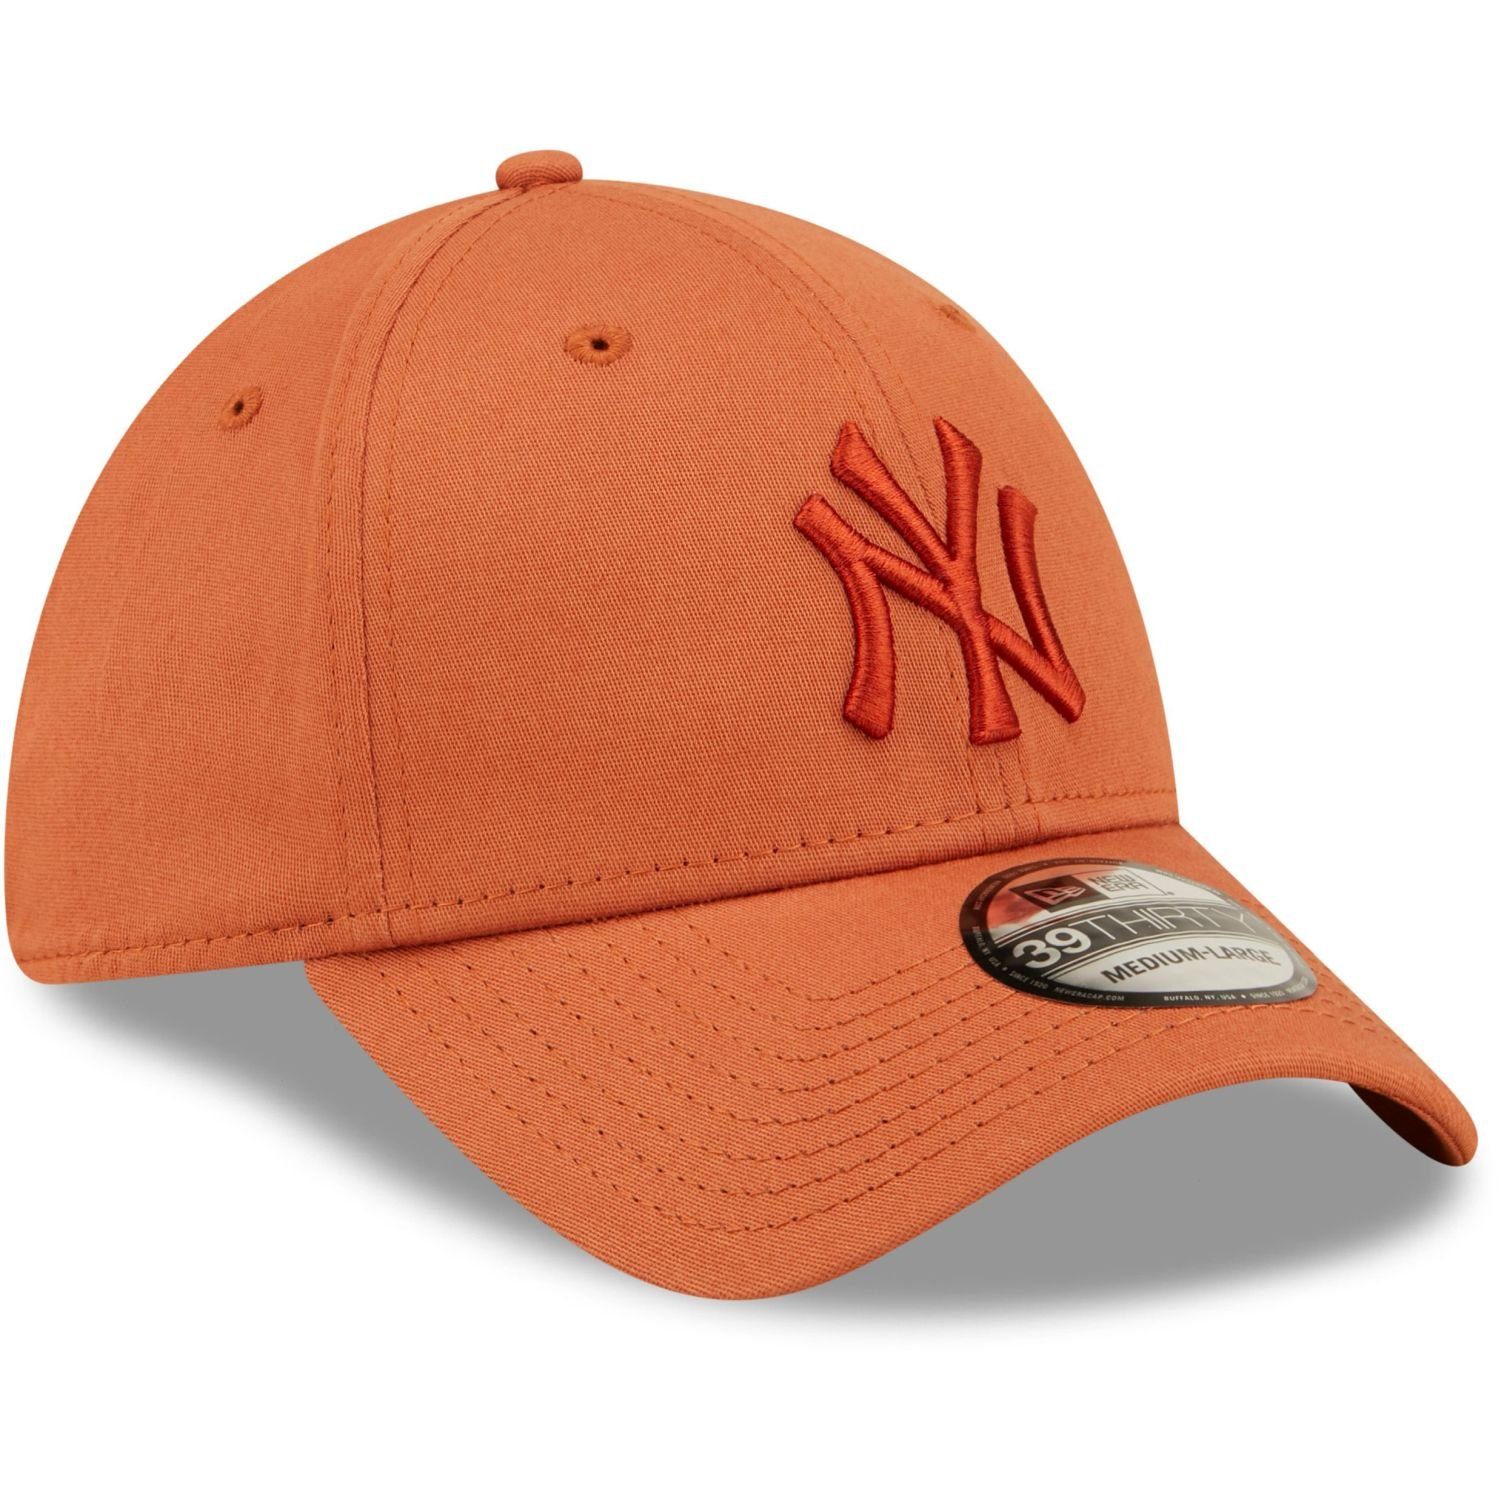 New Era Flex York Cap Stretch New orange 39Thirty Yankees